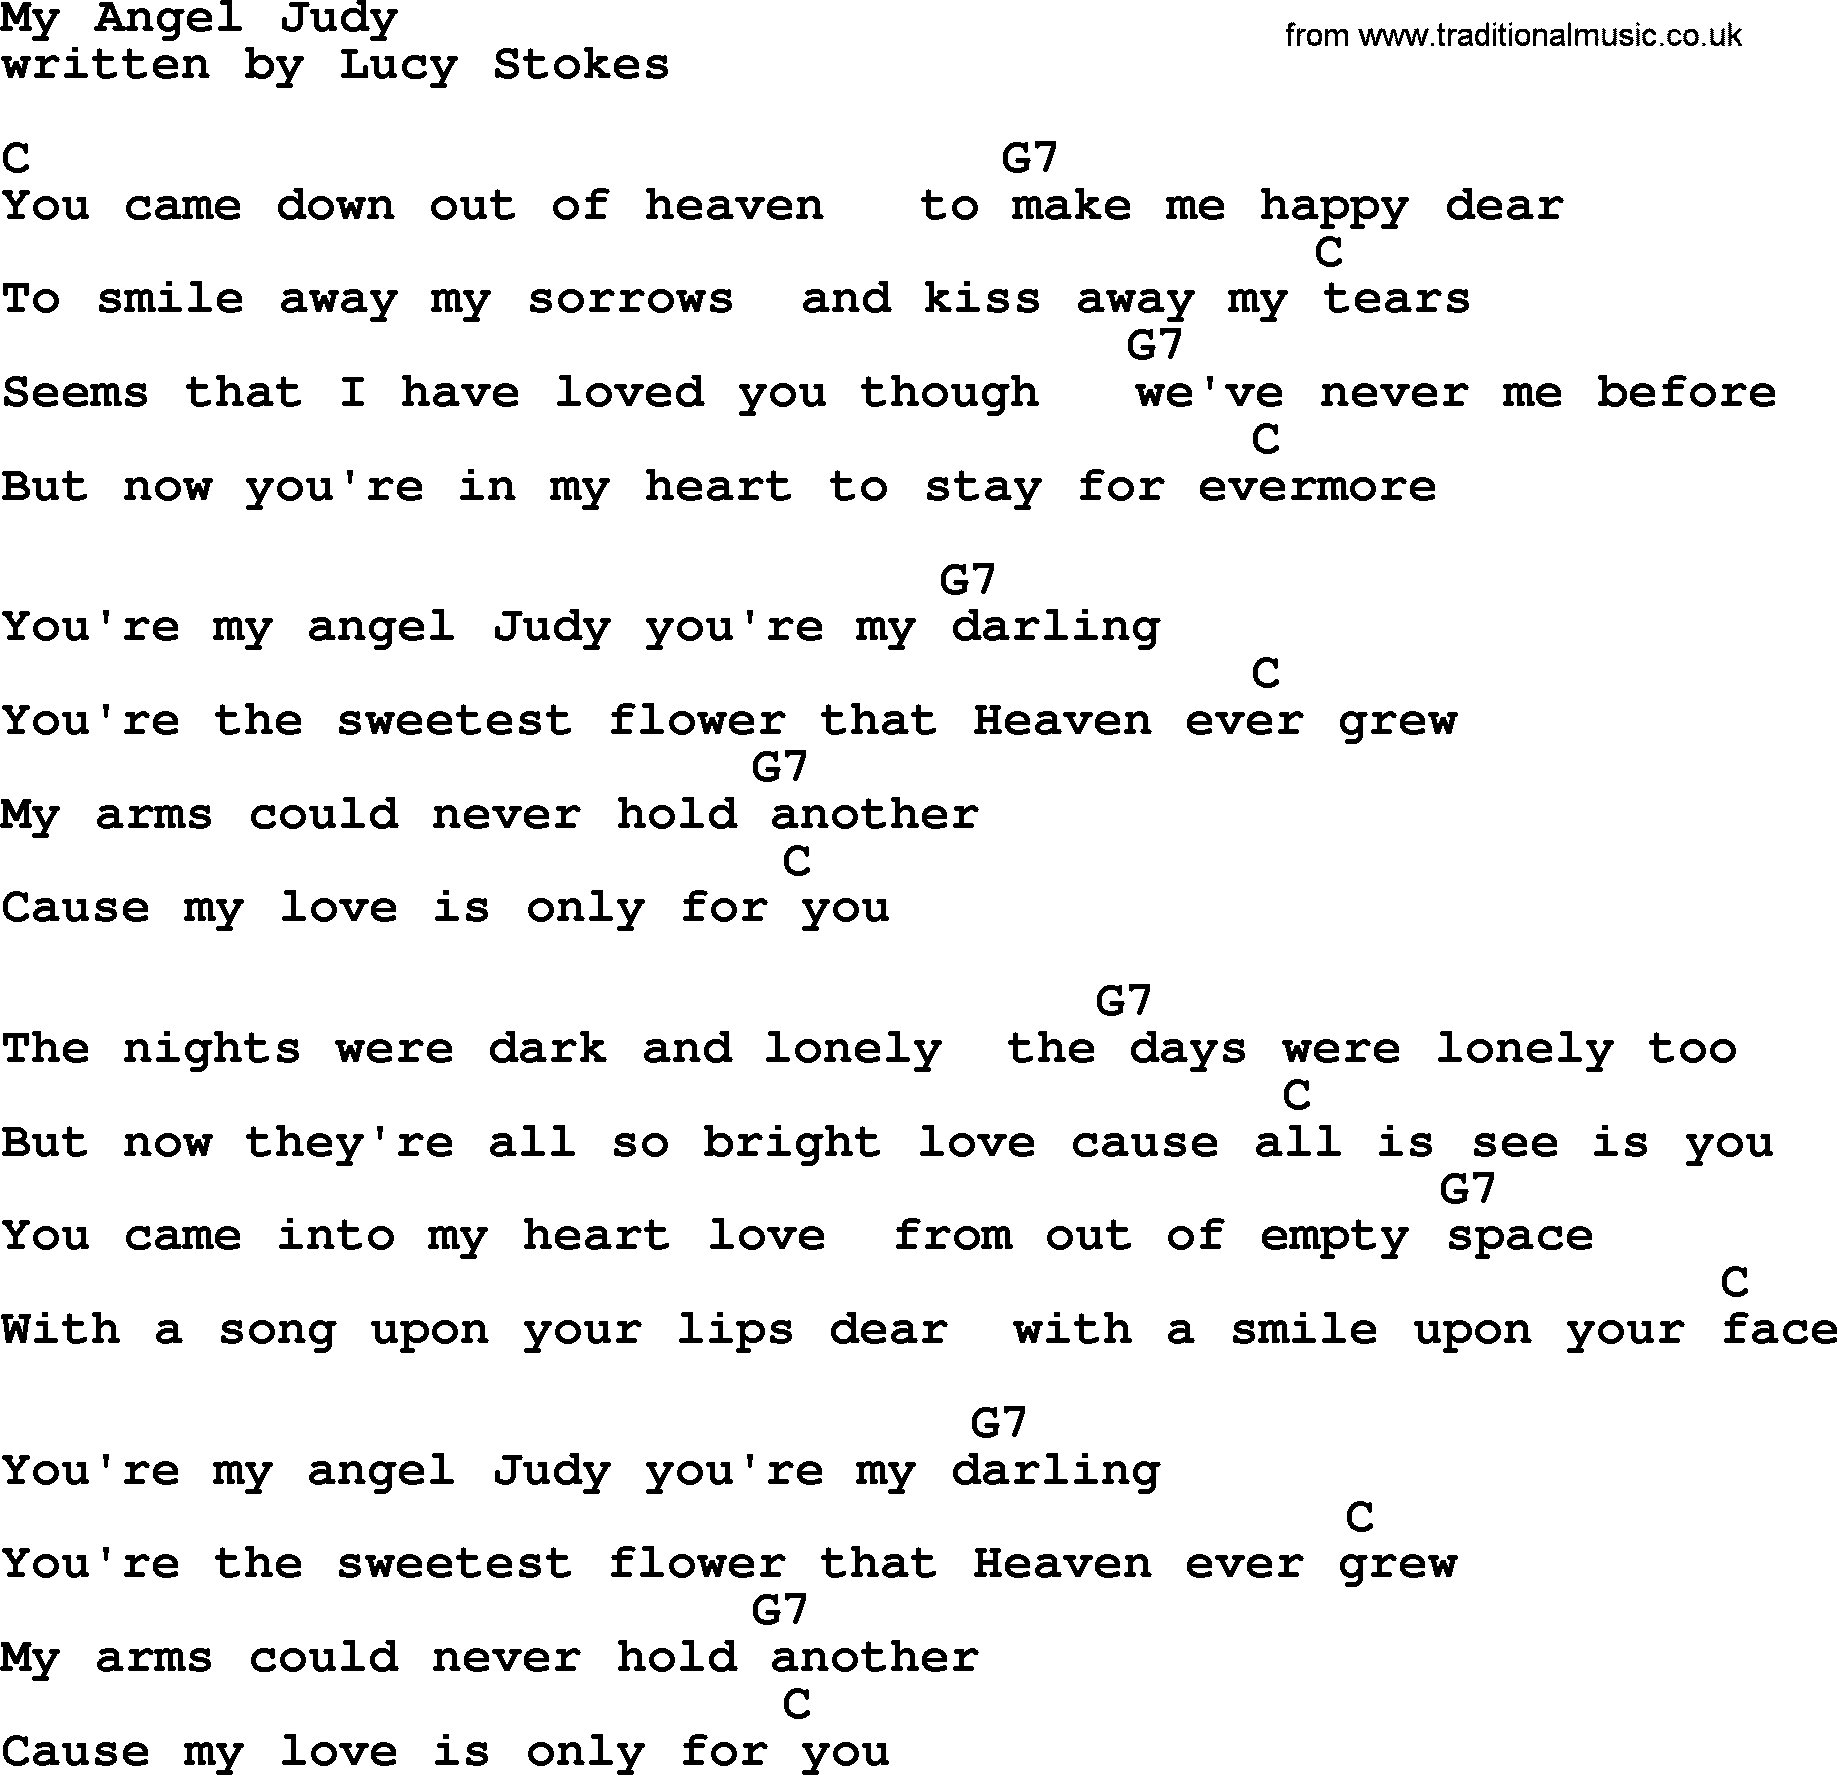 Marty Robbins song: My Angel Judy, lyrics and chords